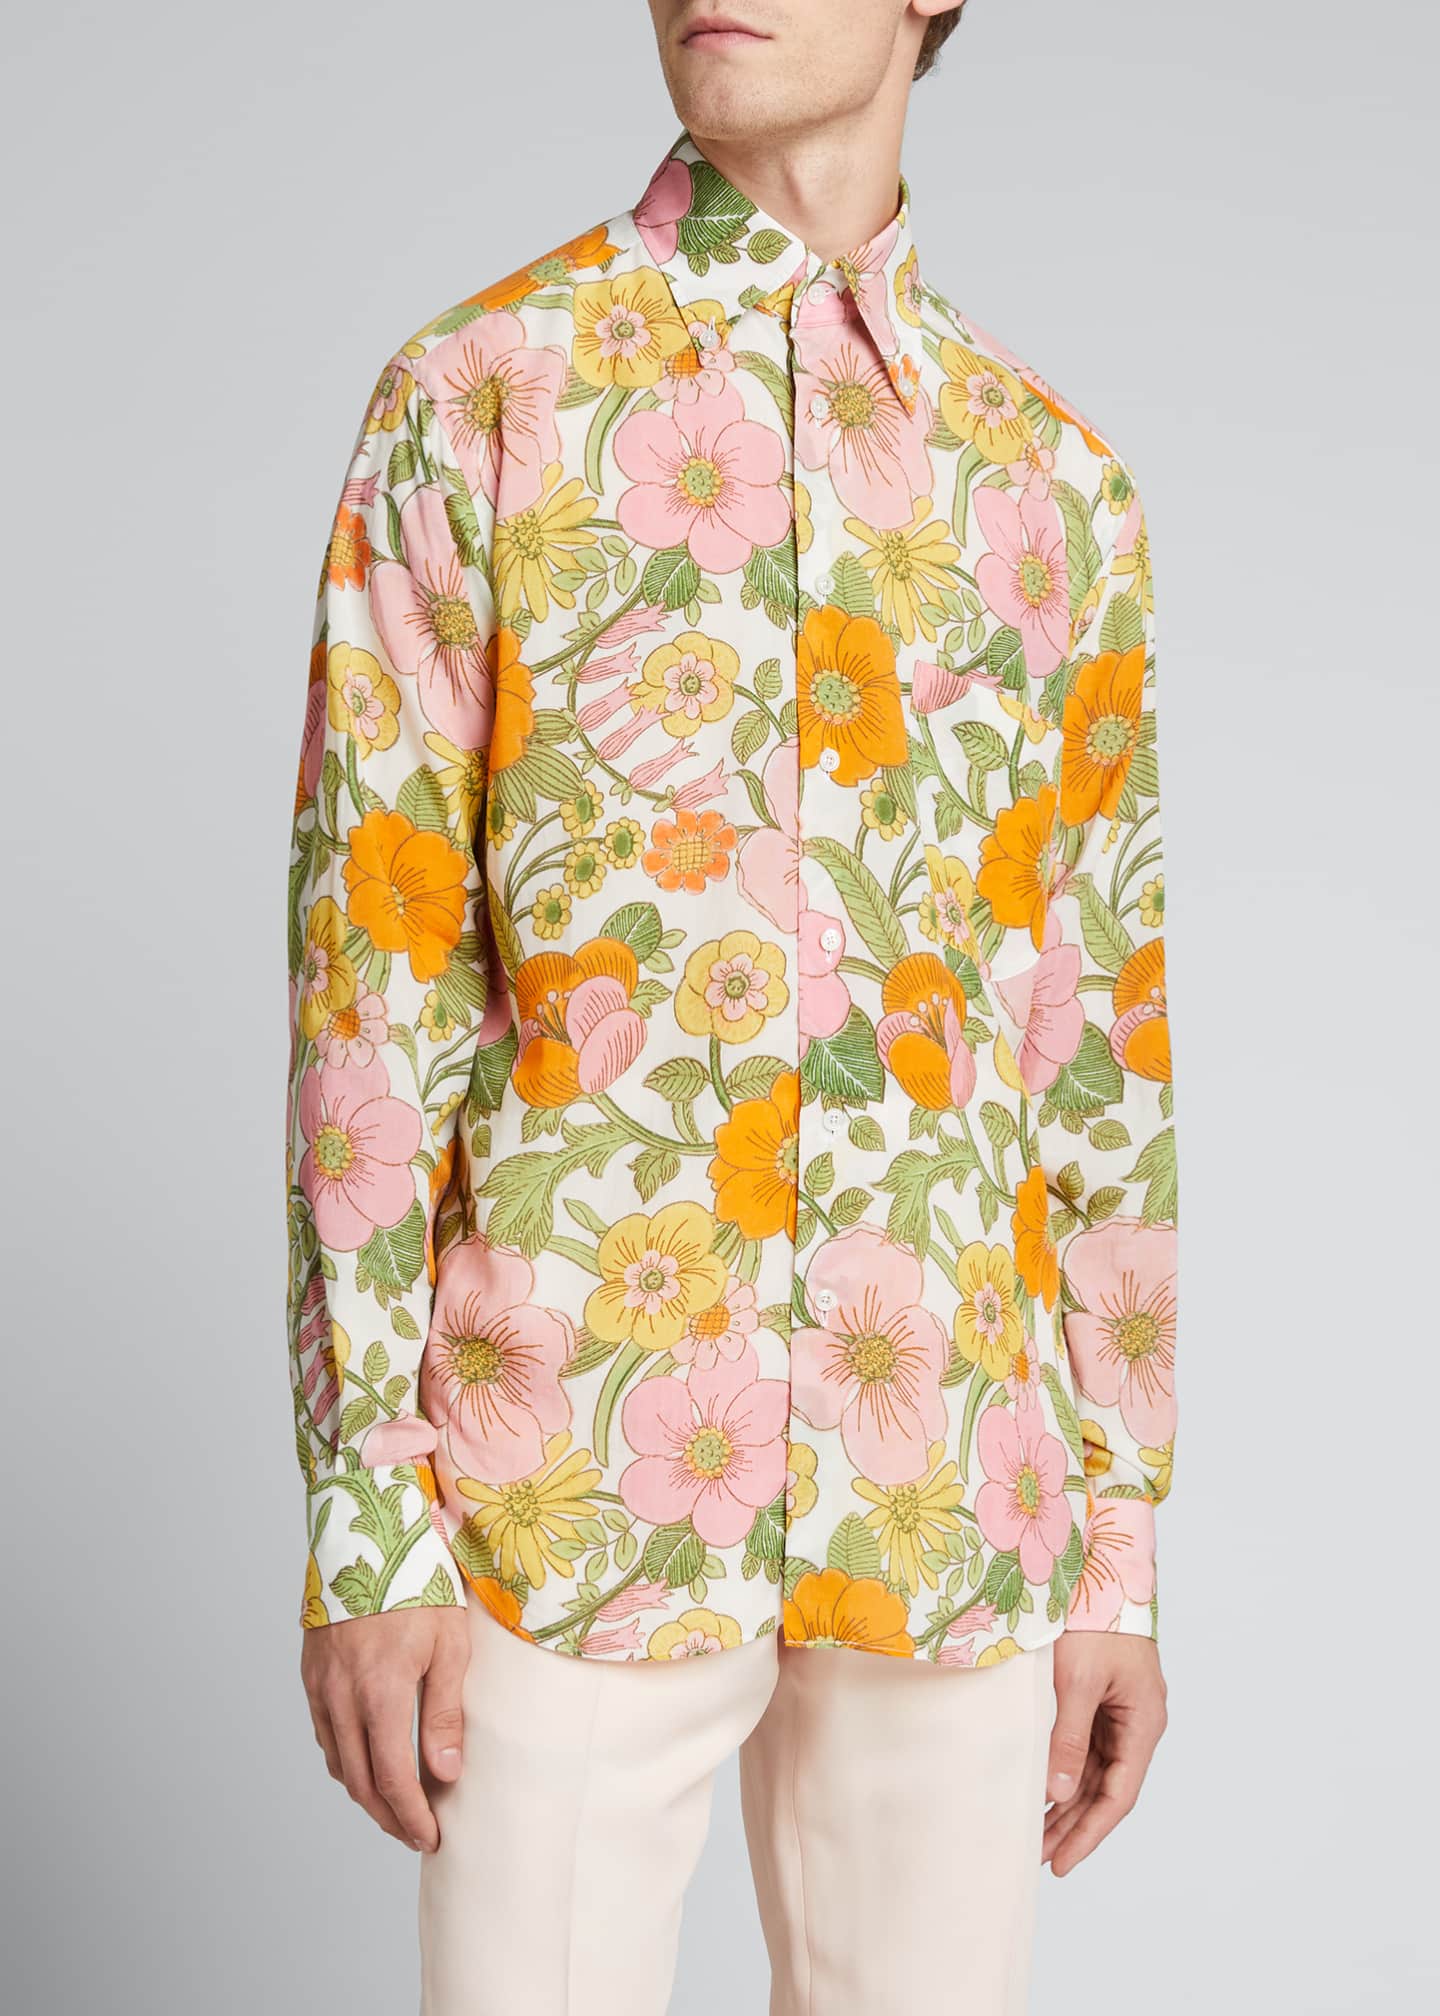 TOM FORD Men's Floral-Print Sport Shirt - Bergdorf Goodman